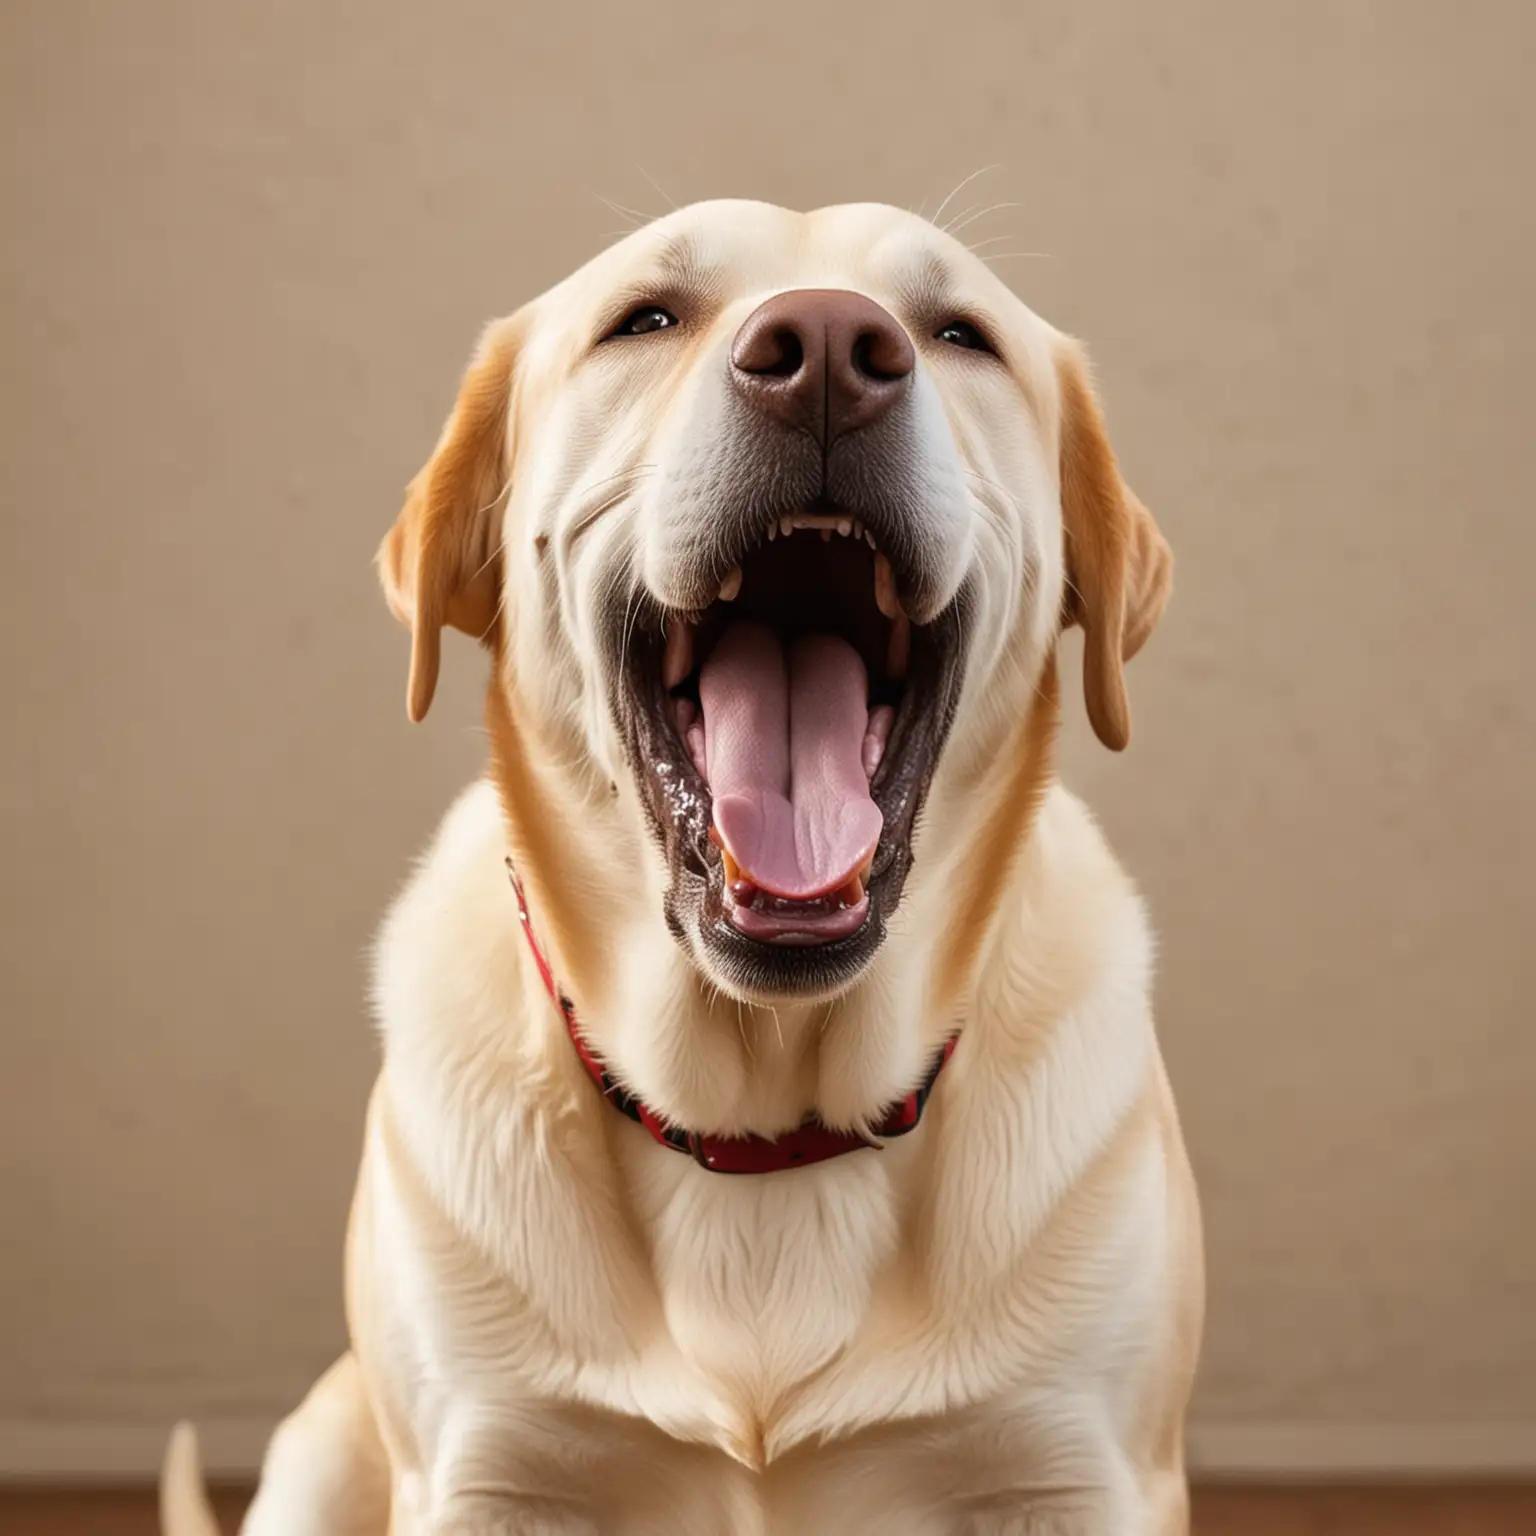 Labrador Retriever Dog with a Big Yawn